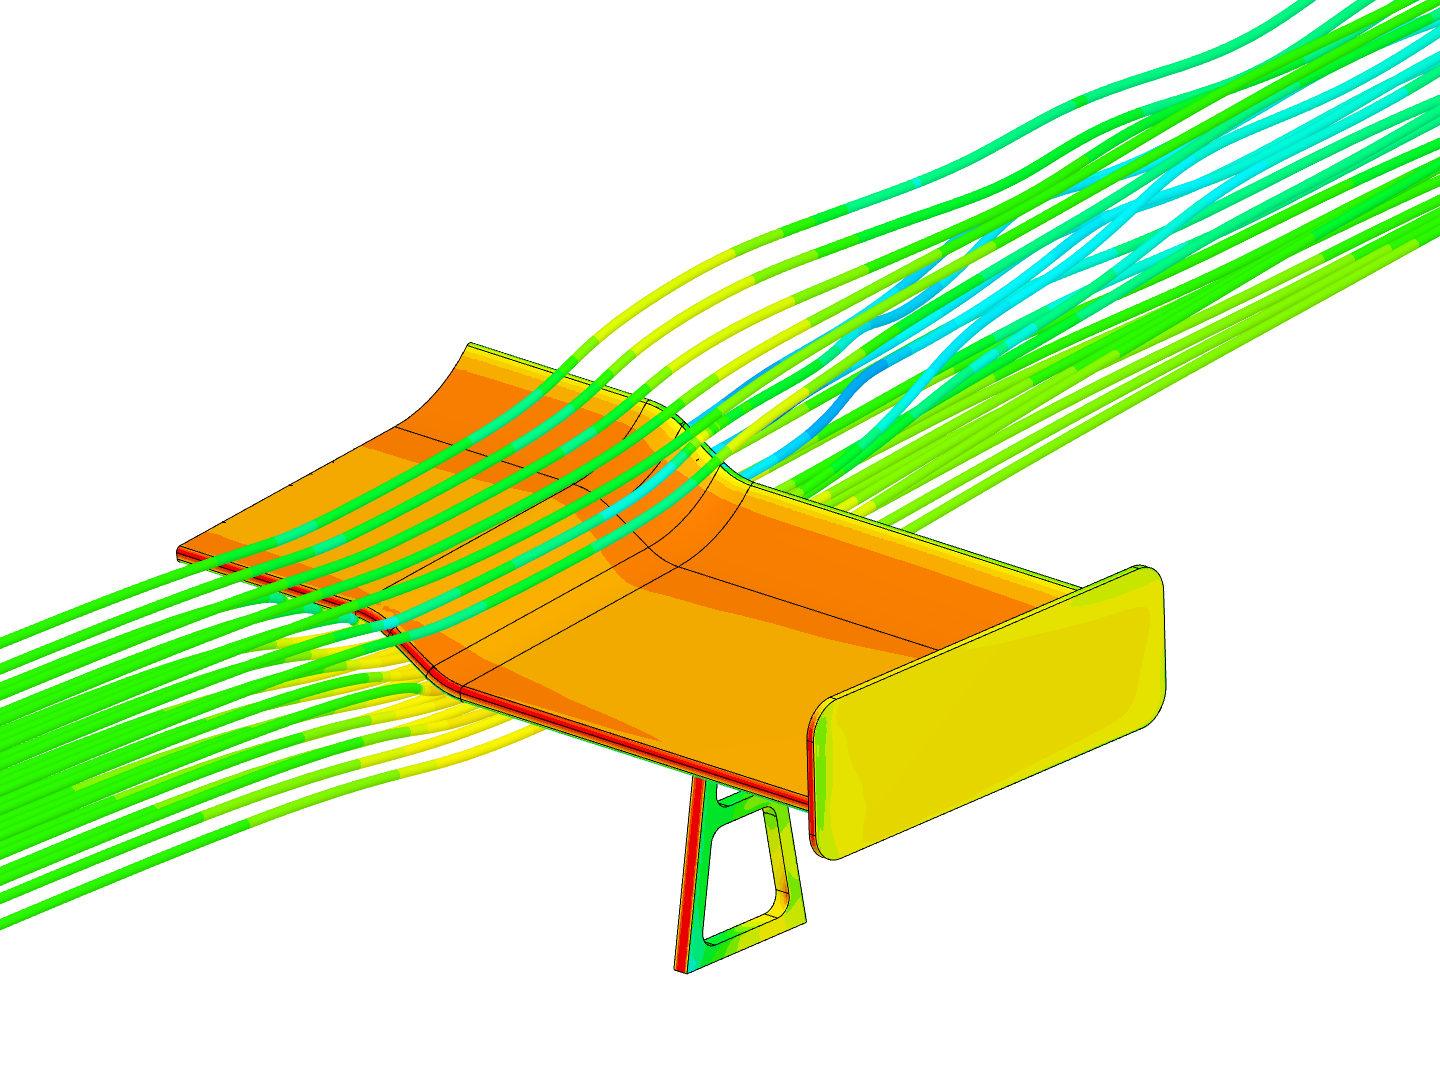 Airflow around a GT Car Spolier image